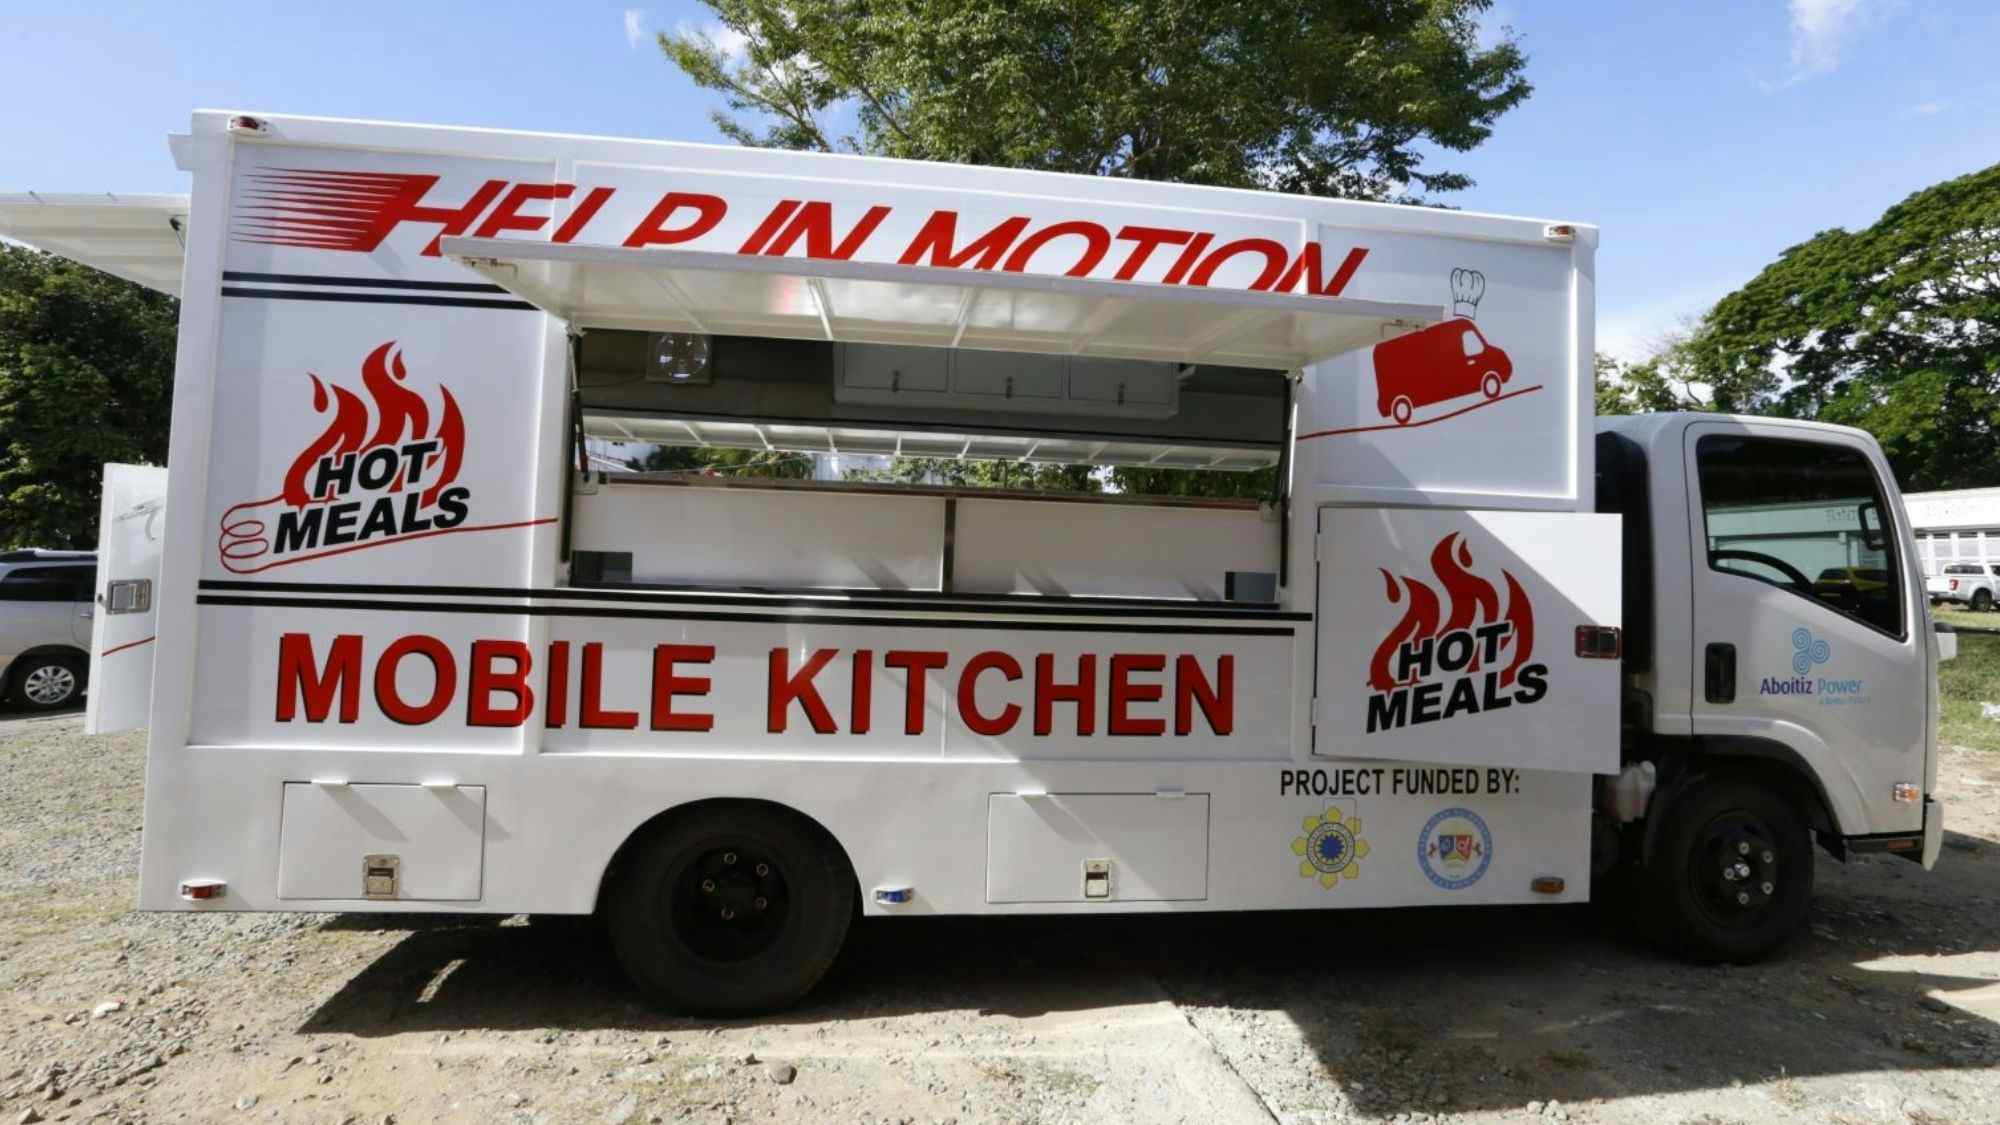 Mobile community kitchen, inilunsad sa Batangas